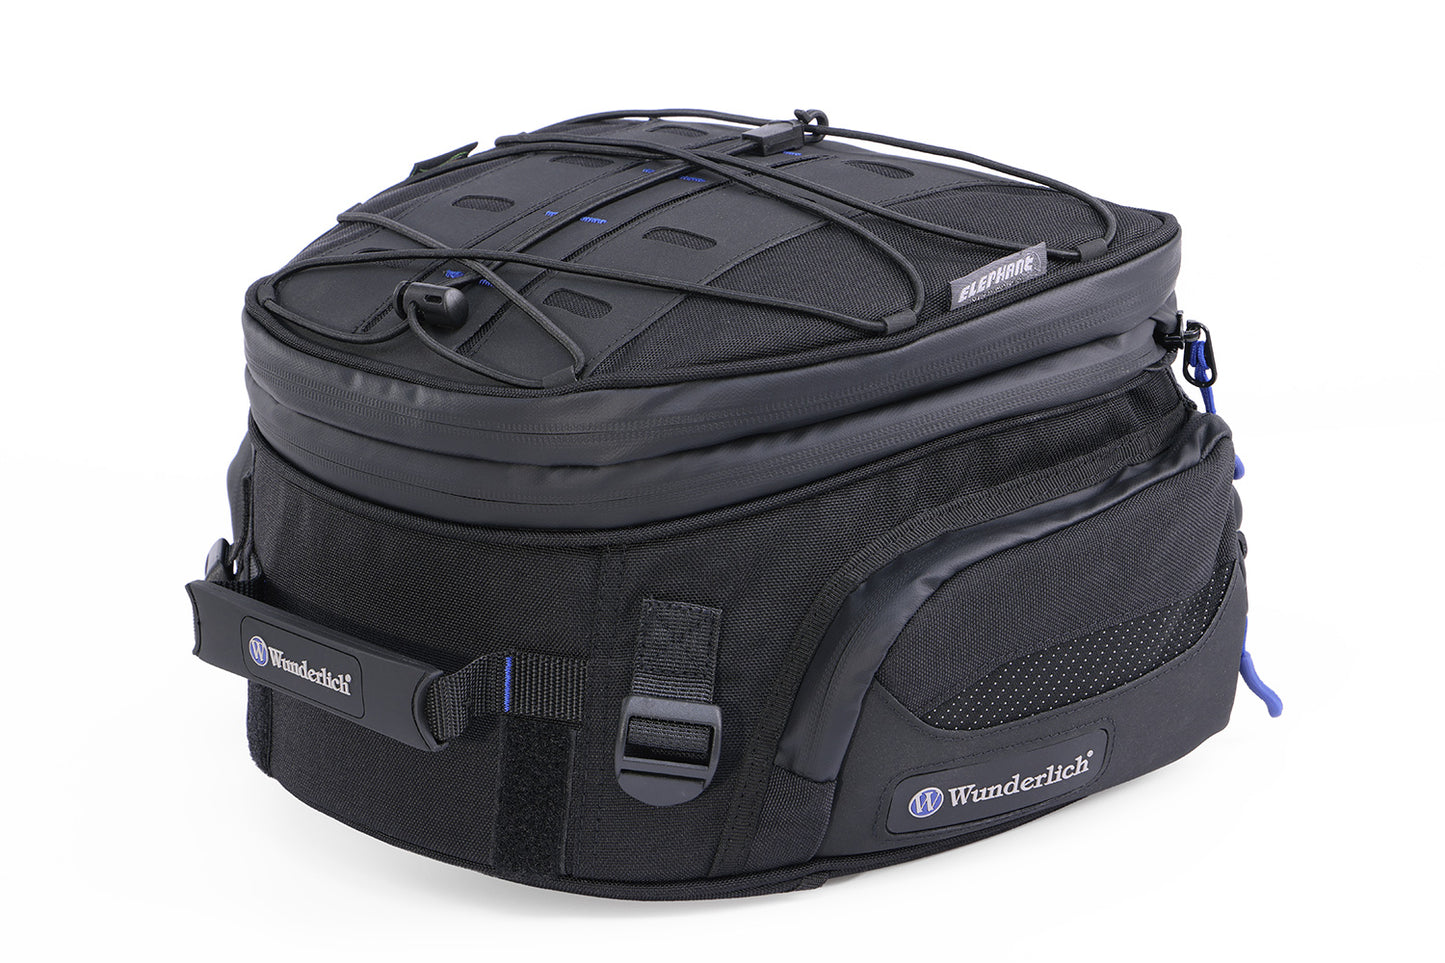 Wunderlich “ELEPHANT” seat and luggage rack bag - black